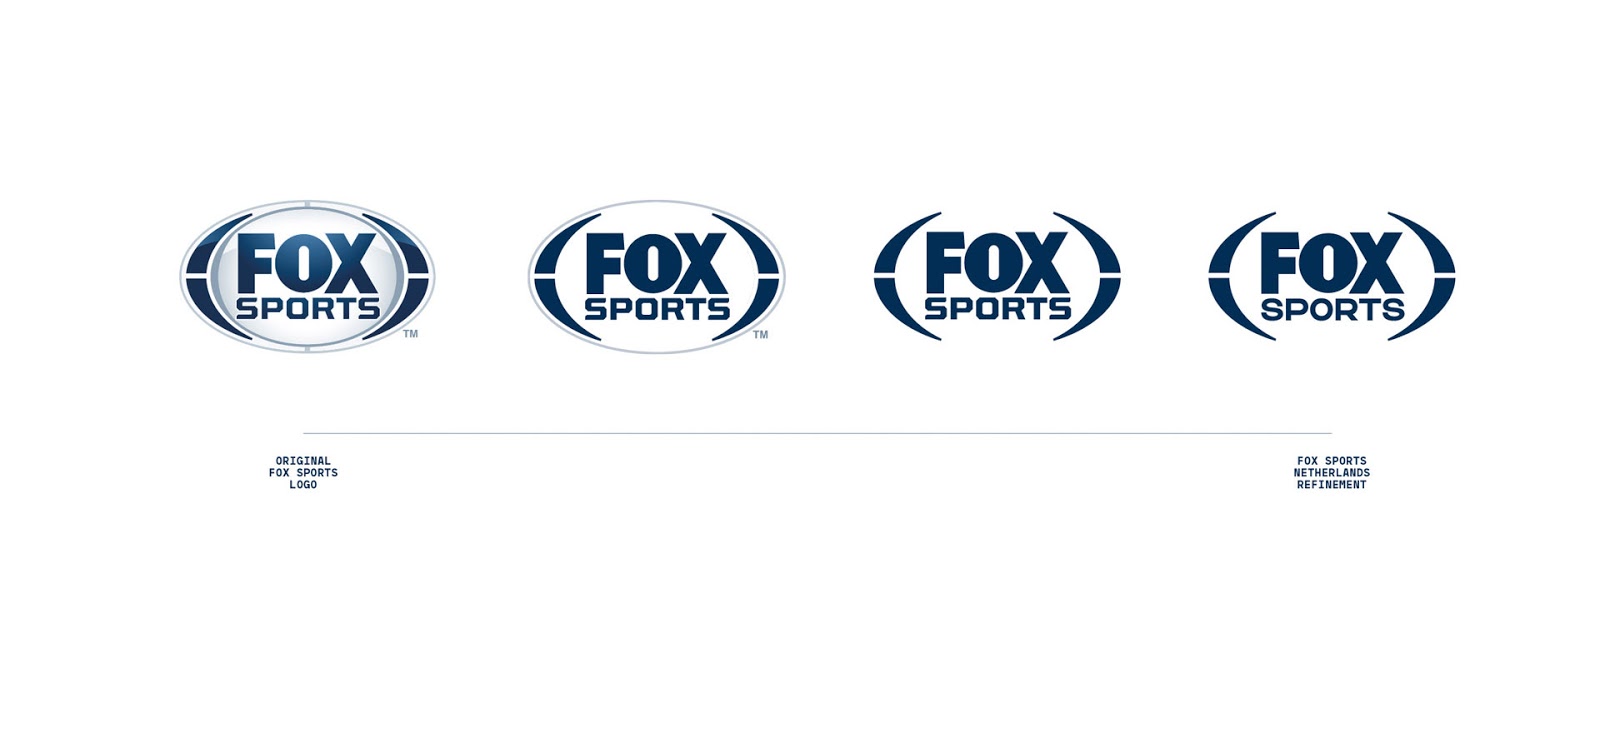 The Branding Source Dixonbaxi Makes Fox Sports Nl The True Home